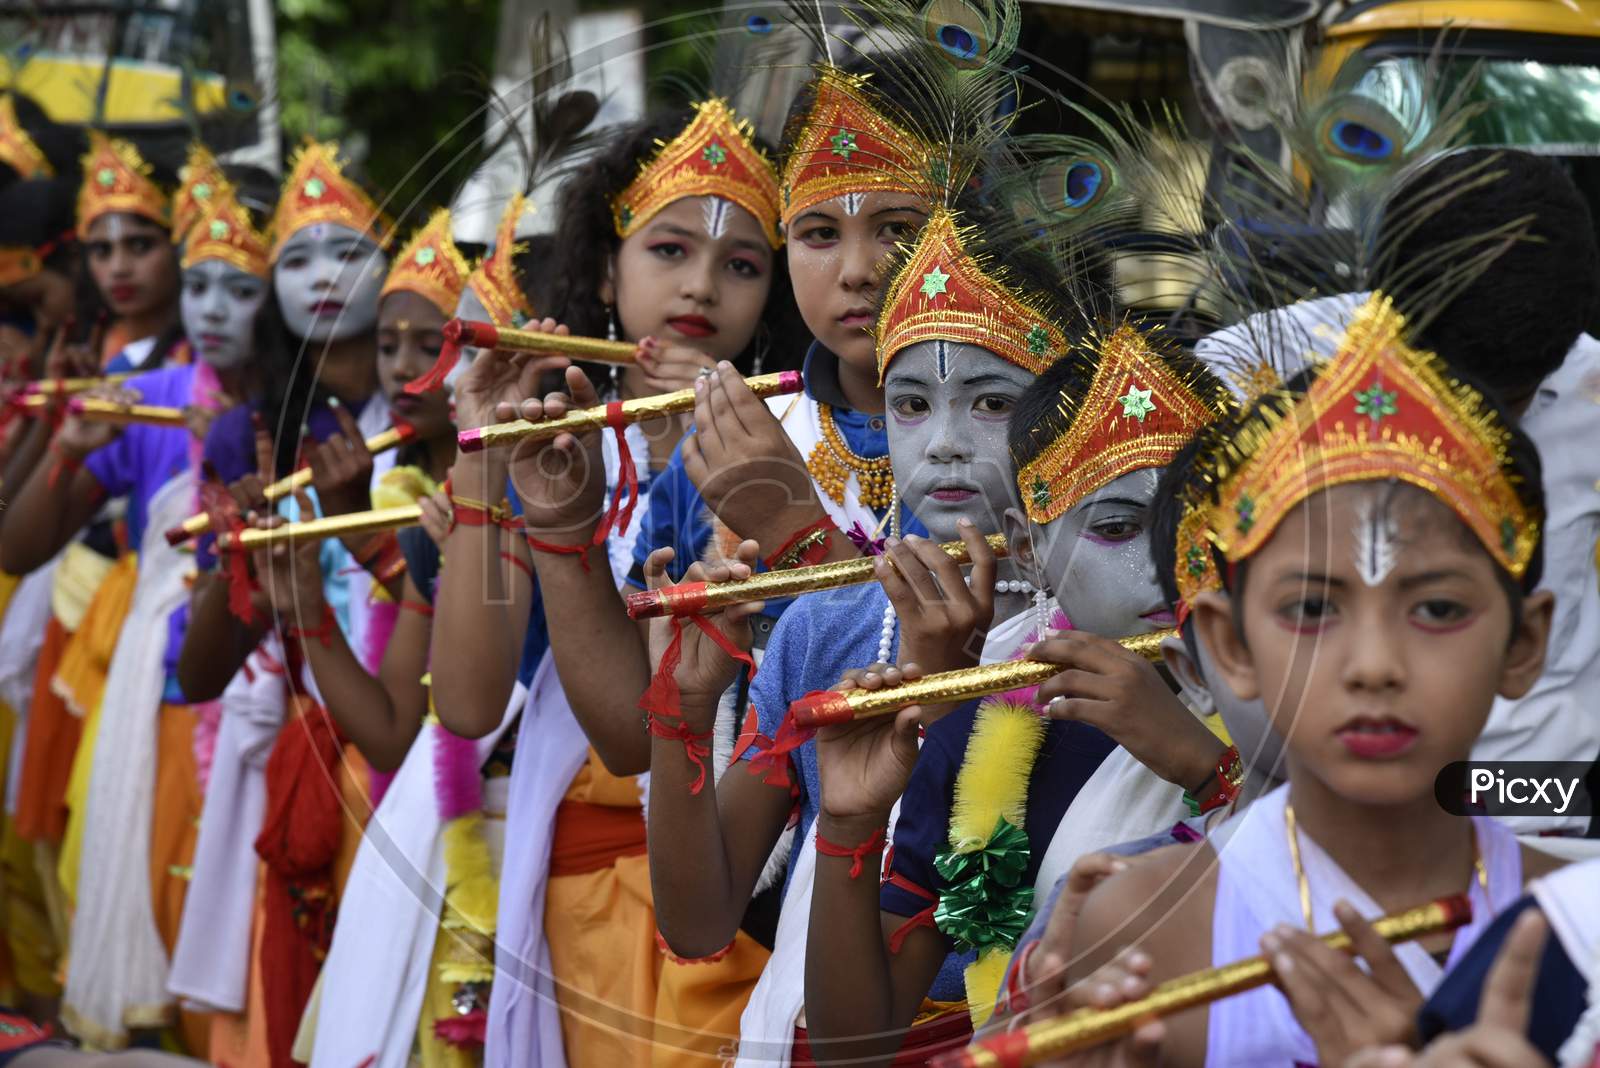 Little Children Dressed Up As Lord Krishna During The Janmashtami Festival In Morigaon, Assam, India